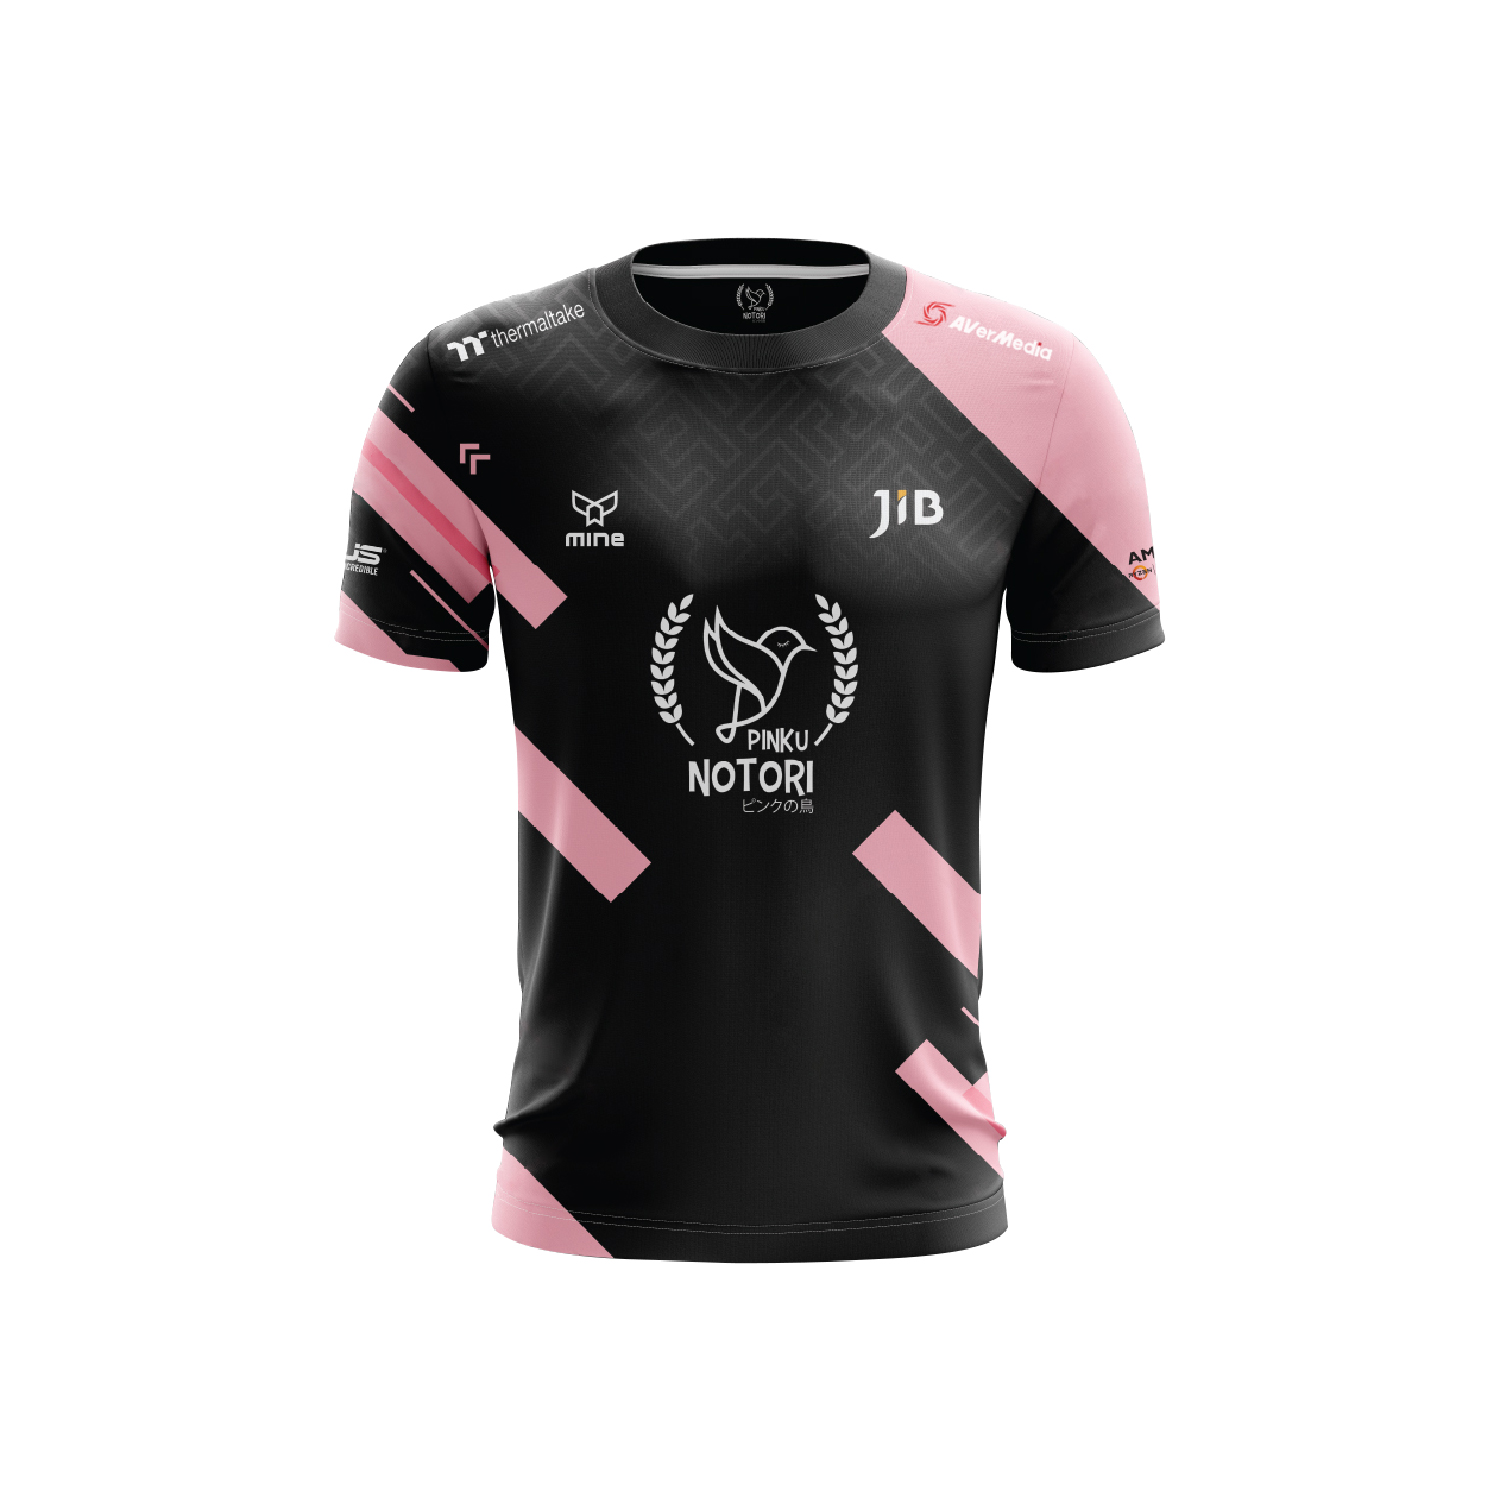 Pinku Notori Sport Shirt2021 - BlackPink